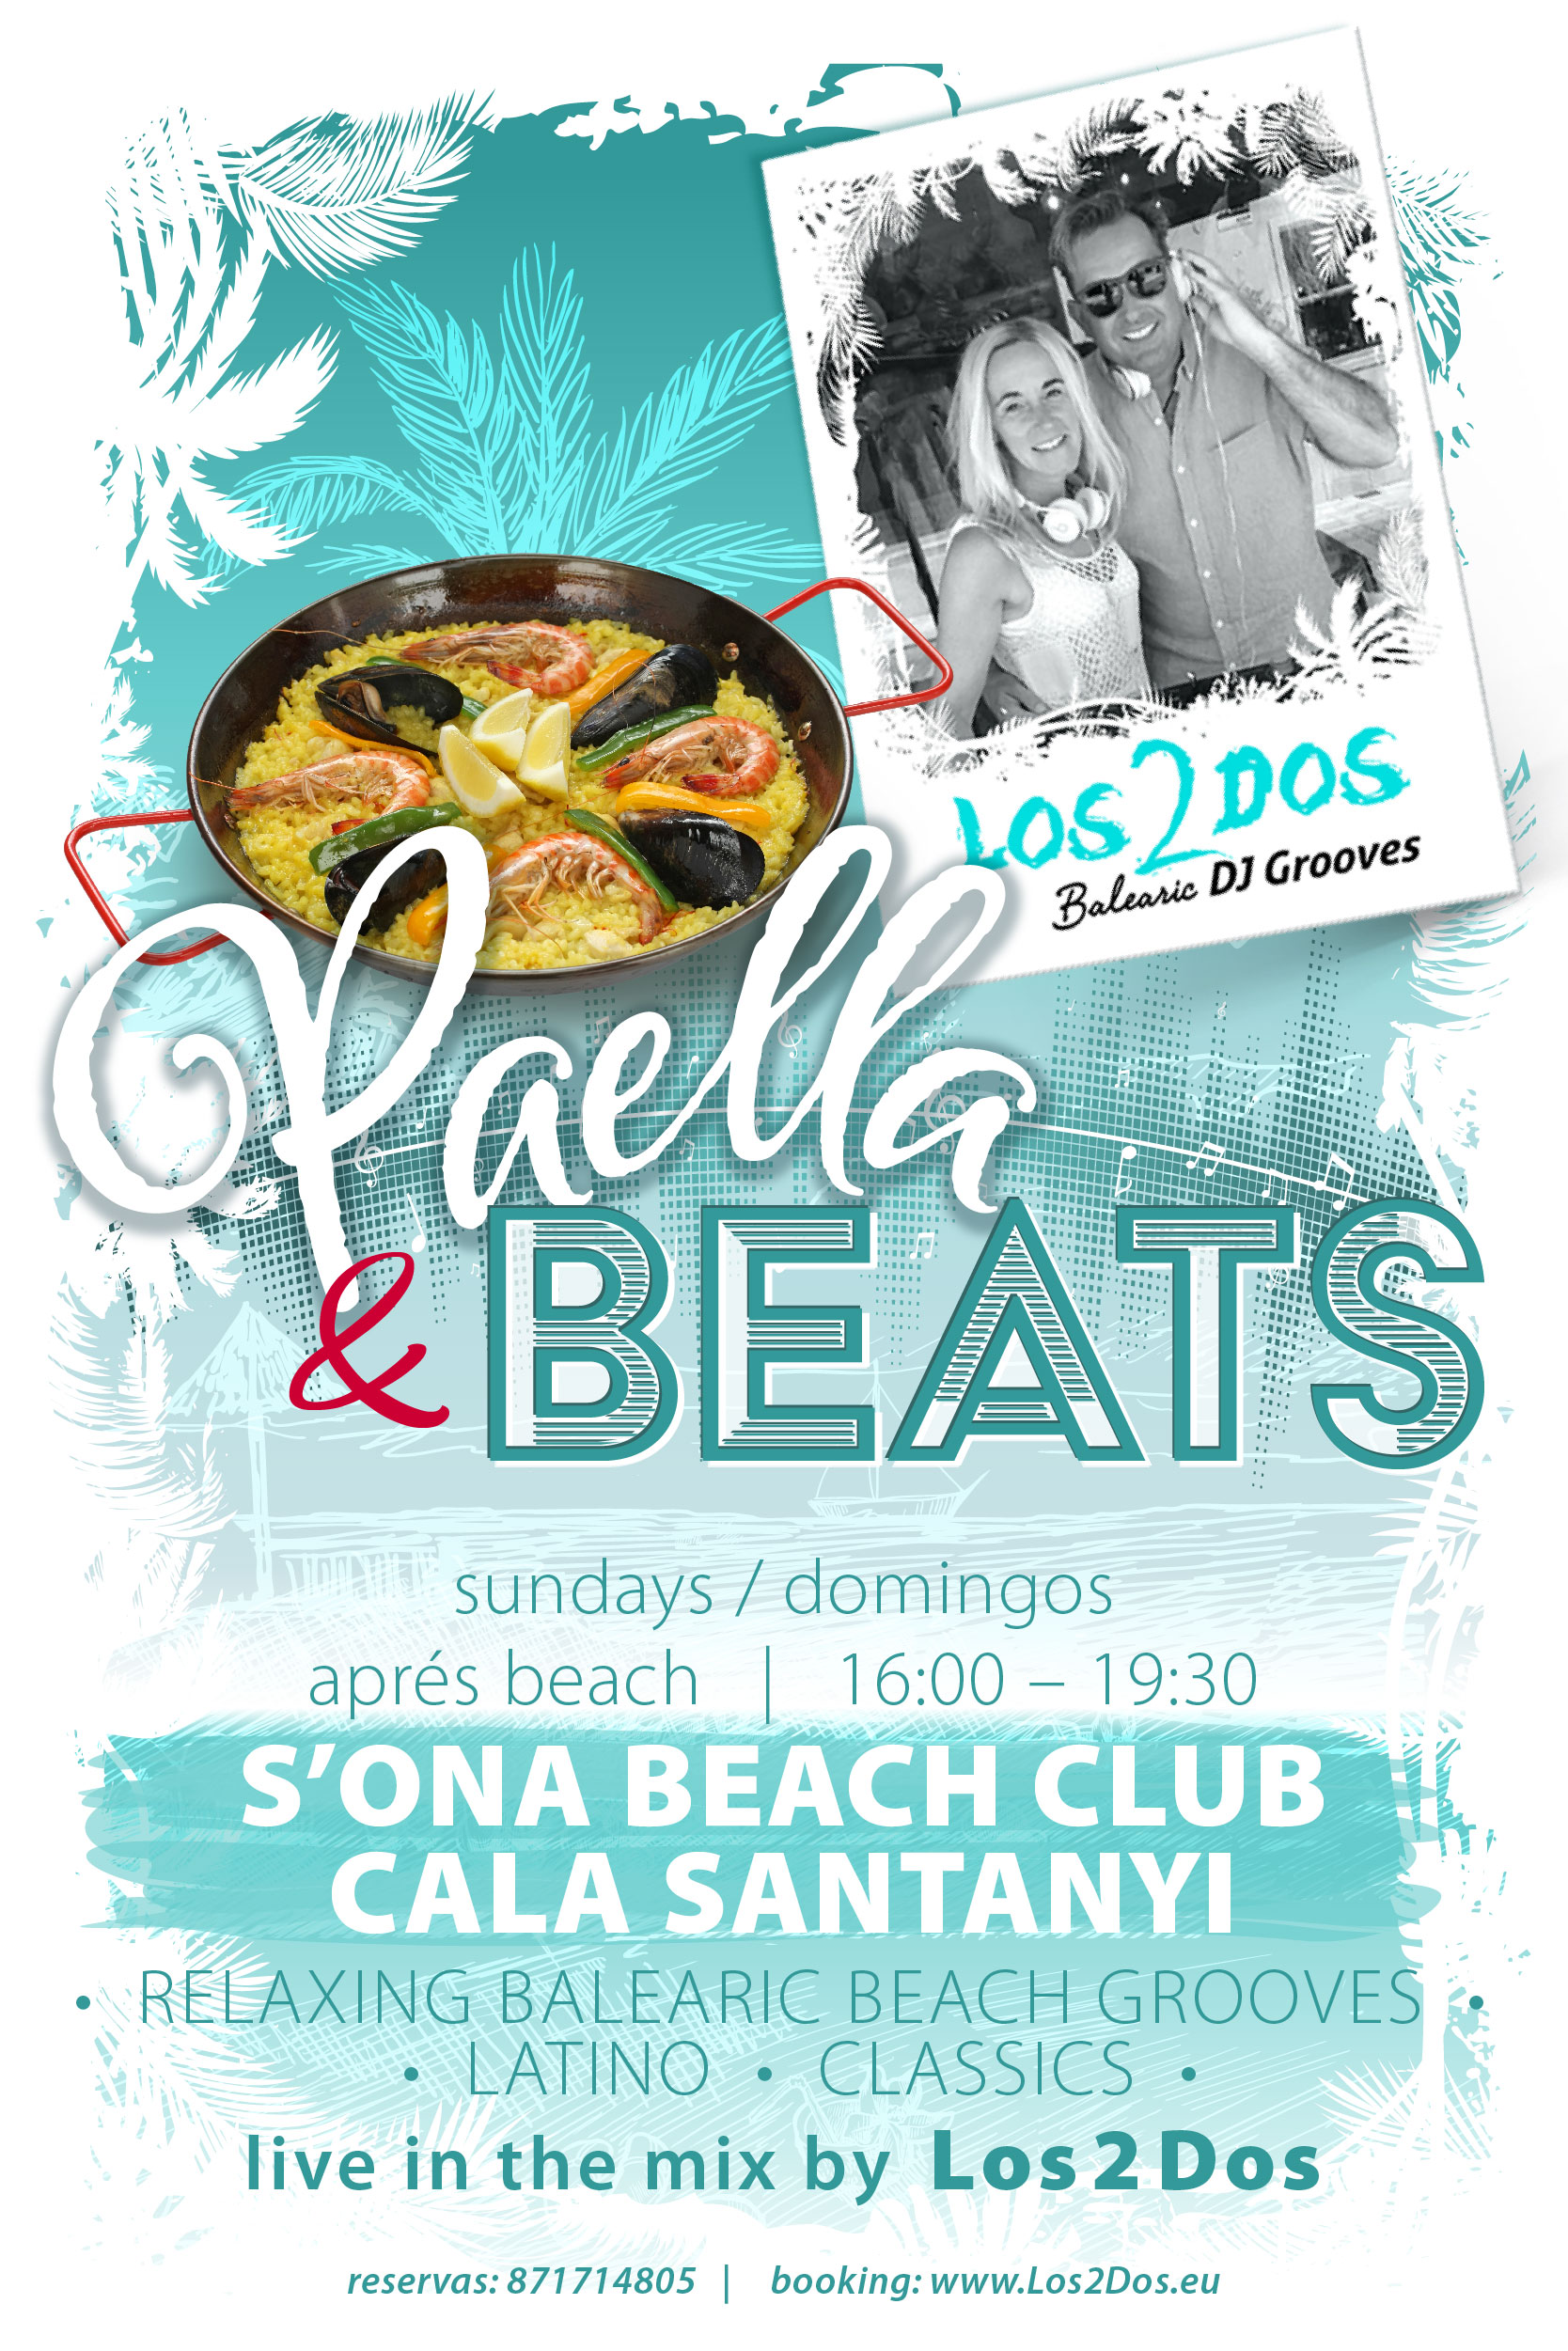 Los2Dos Mallorca bei Paelly & Beats sonntag im S'ona Beach Club Cala Santanyi